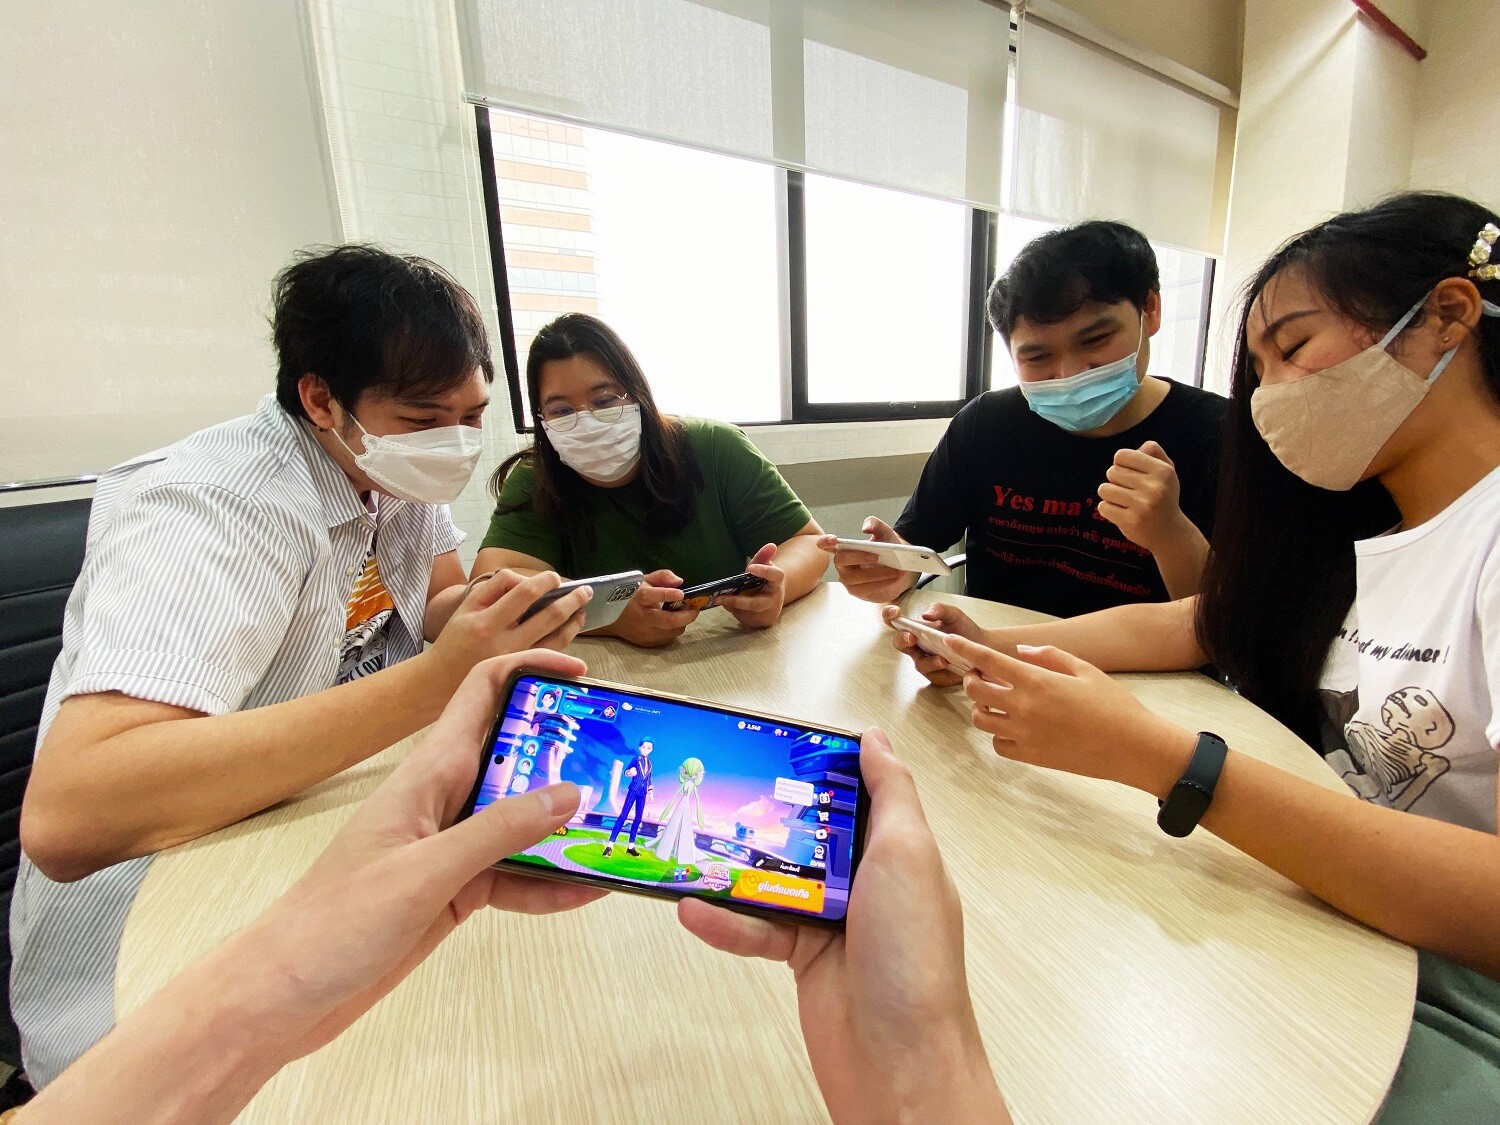 AIS eSport - เกมโปเกมอน เปิดสังเวียนยิมลีดเดอร์กับการแข่งขัน Pokemon Unite ครั้งแรกในไทย